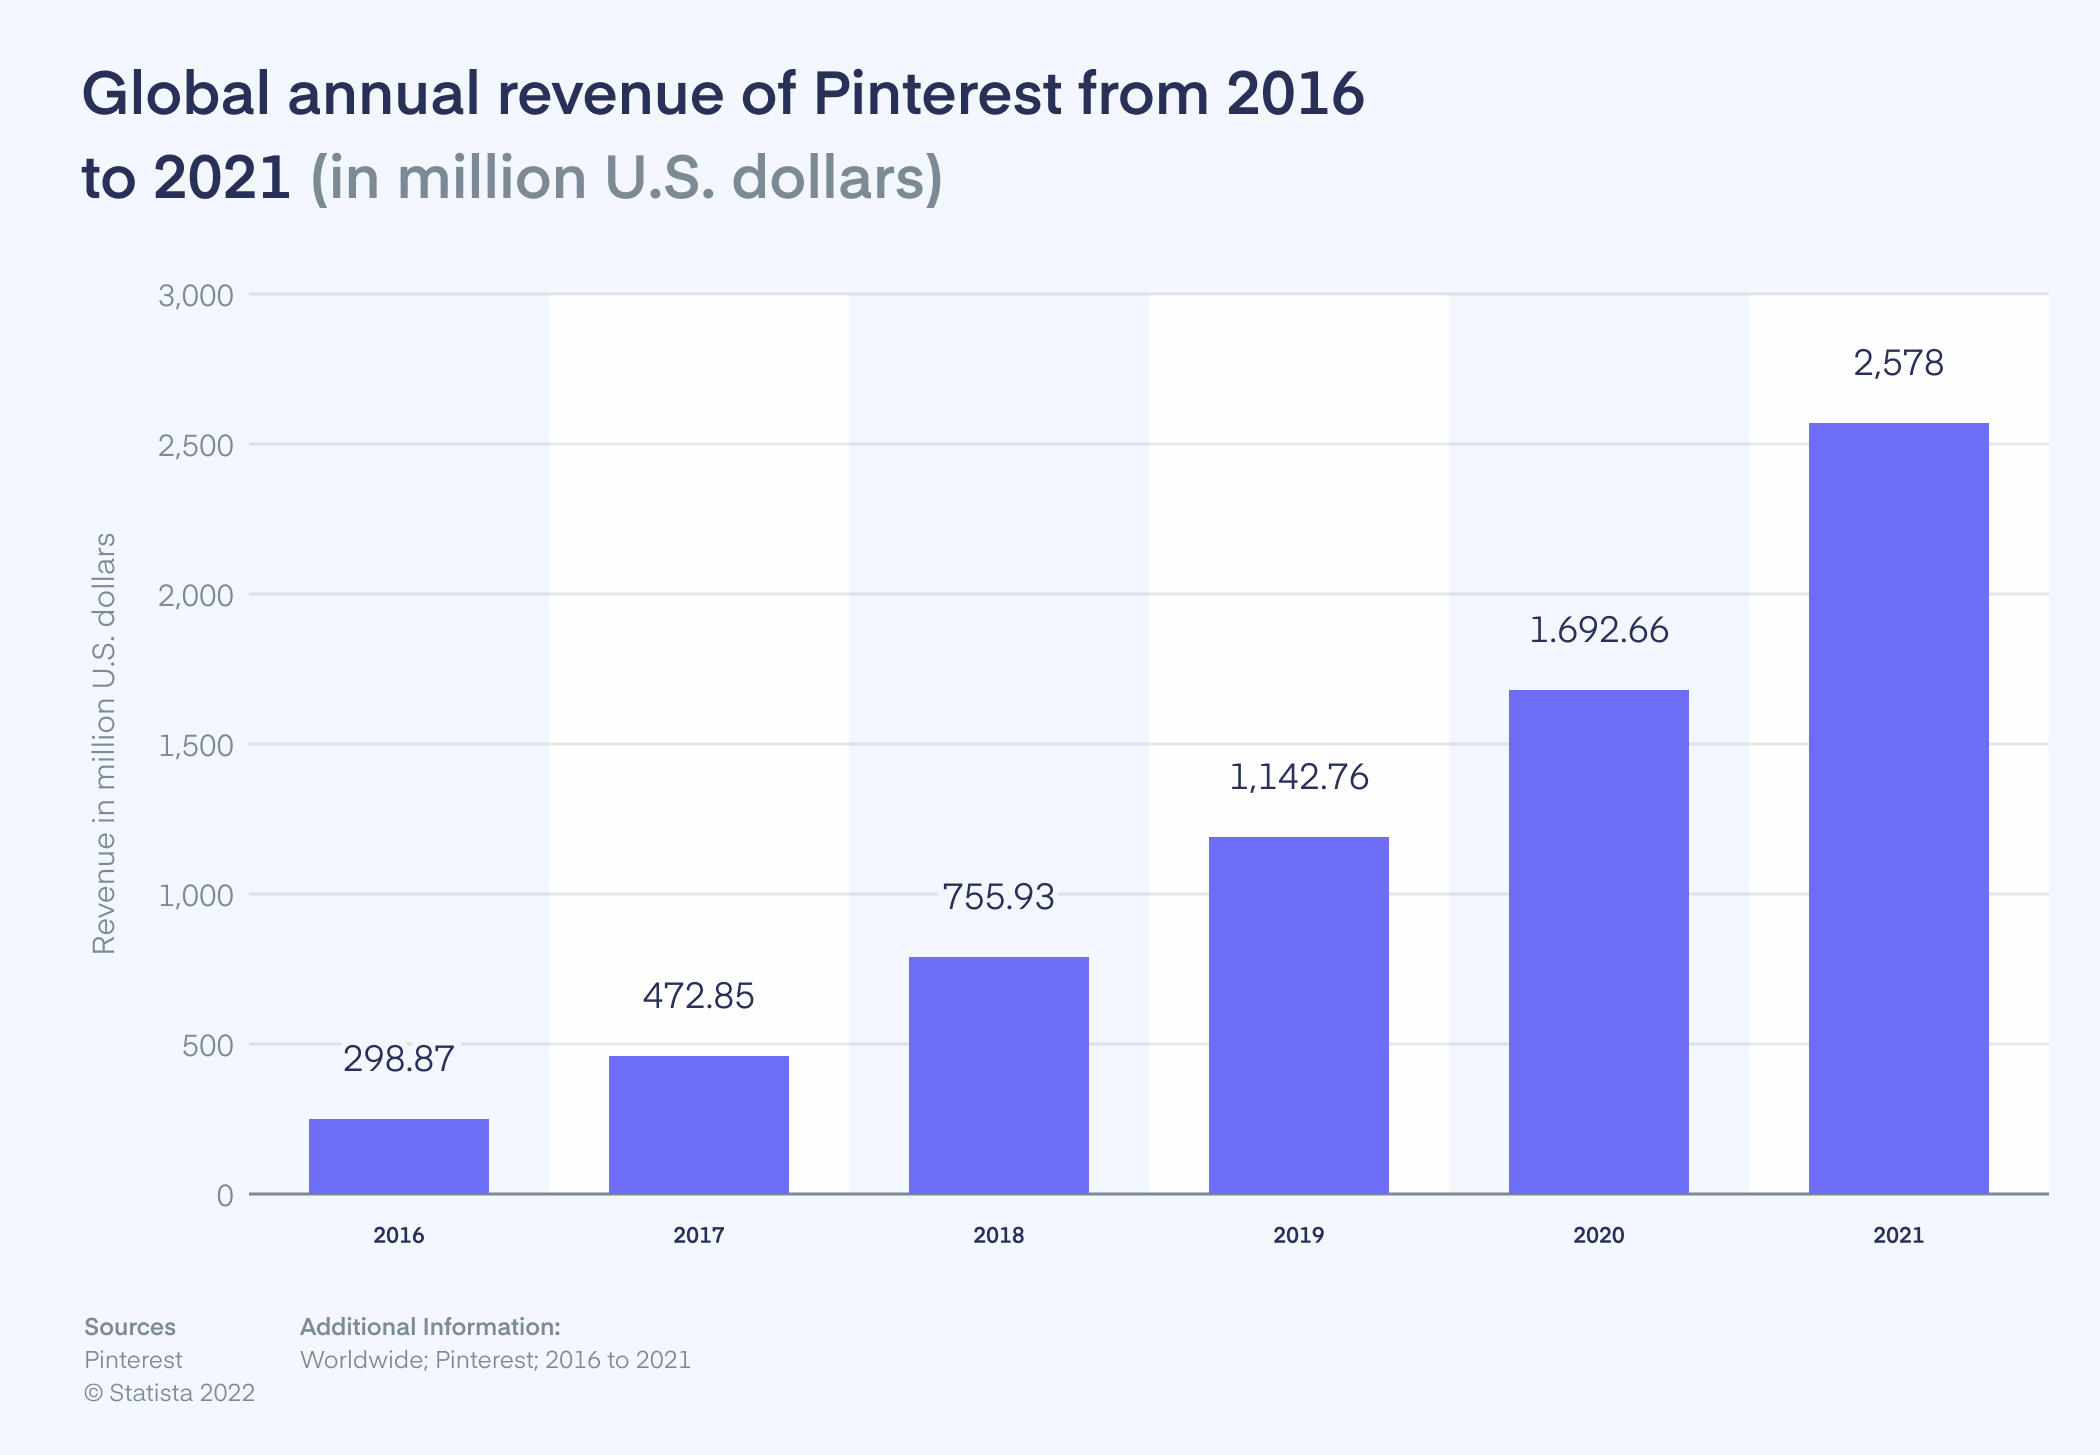 Global Annual Revenue of Pinterest 2016-2021